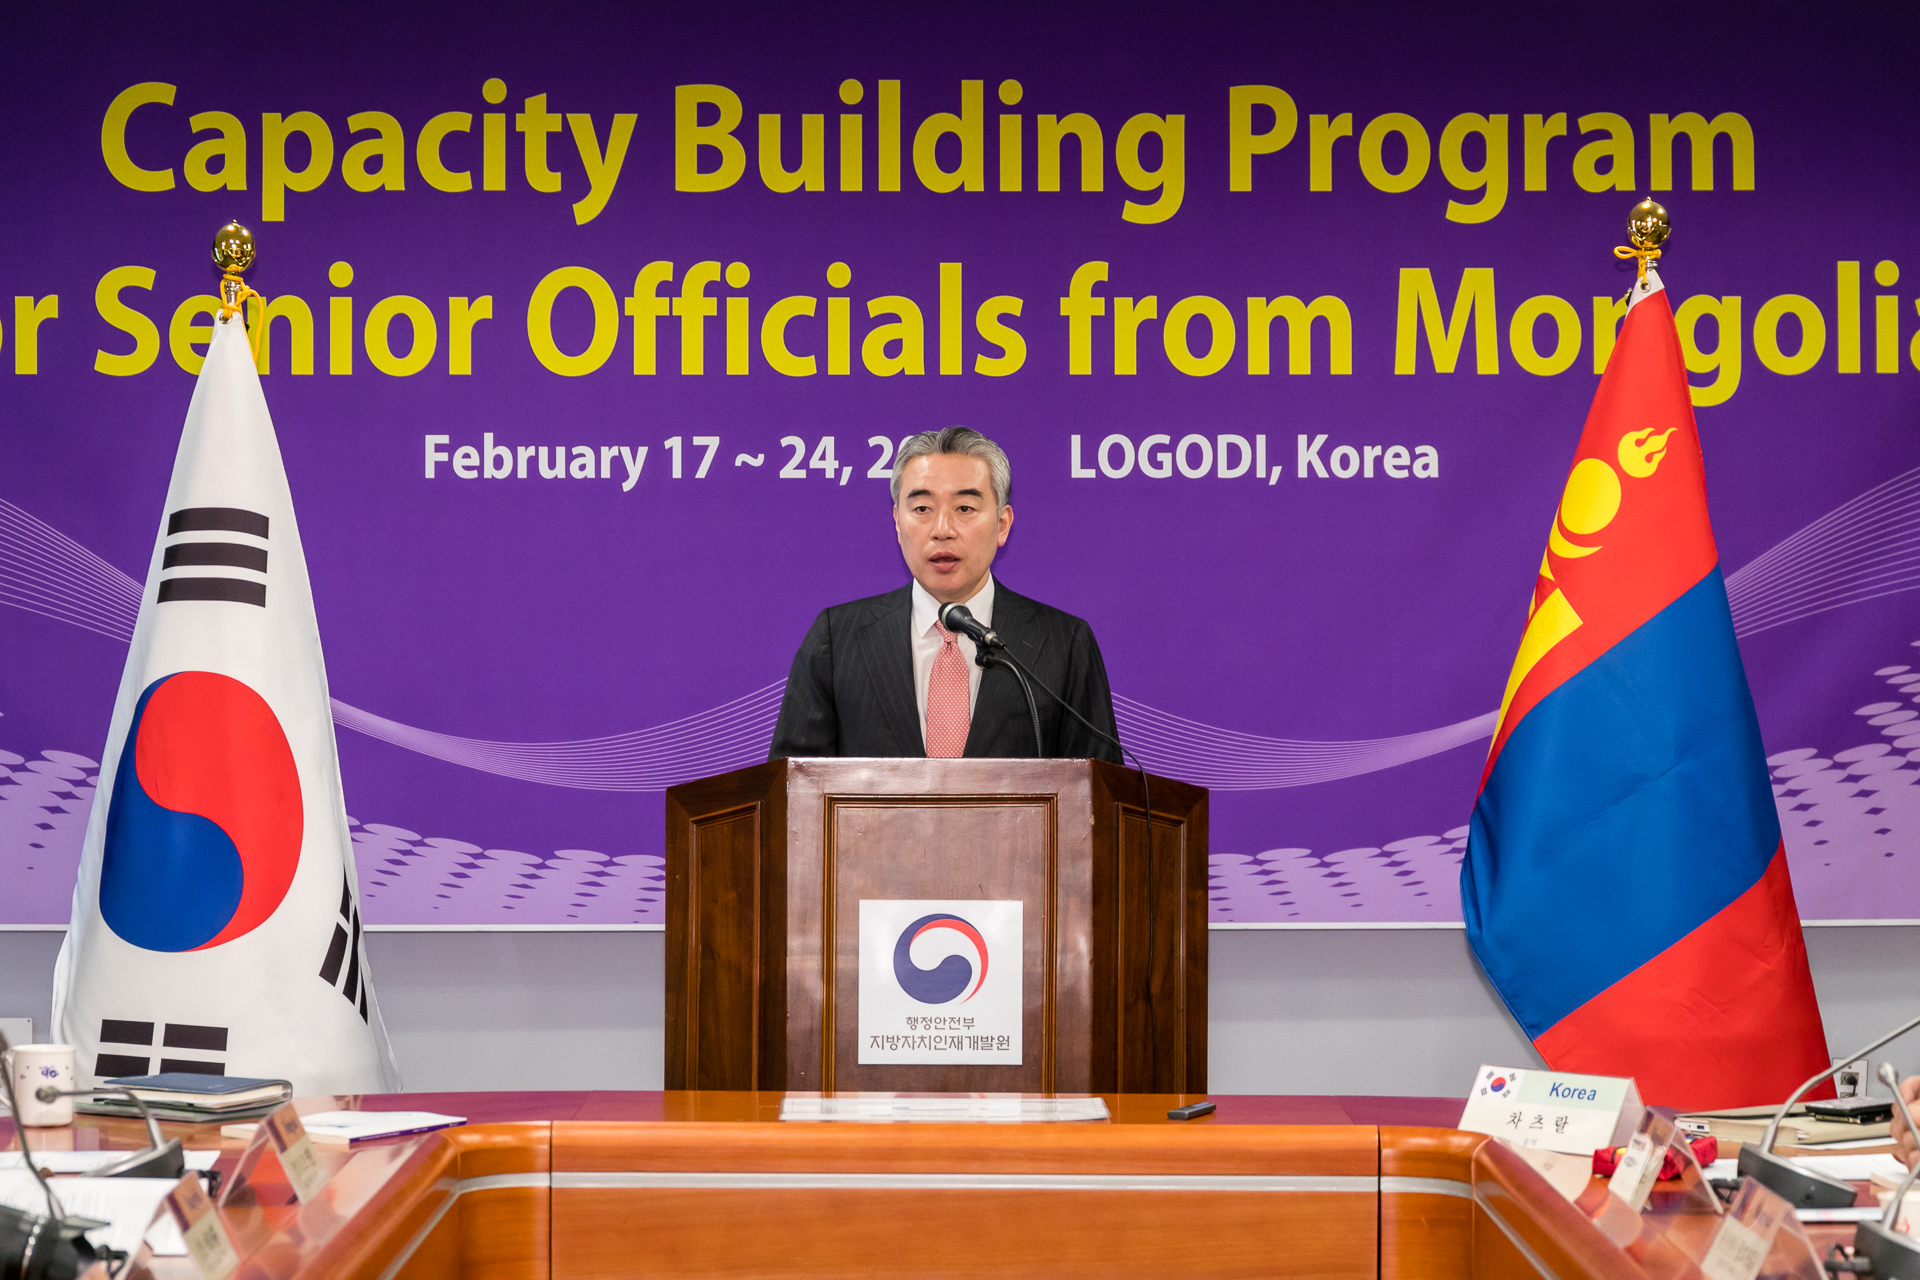 Mongolian officials share Korea%26%2339%3Bs experiences in Local Tourism Development 큰 이미지[마우스 클릭 시 창닫기]